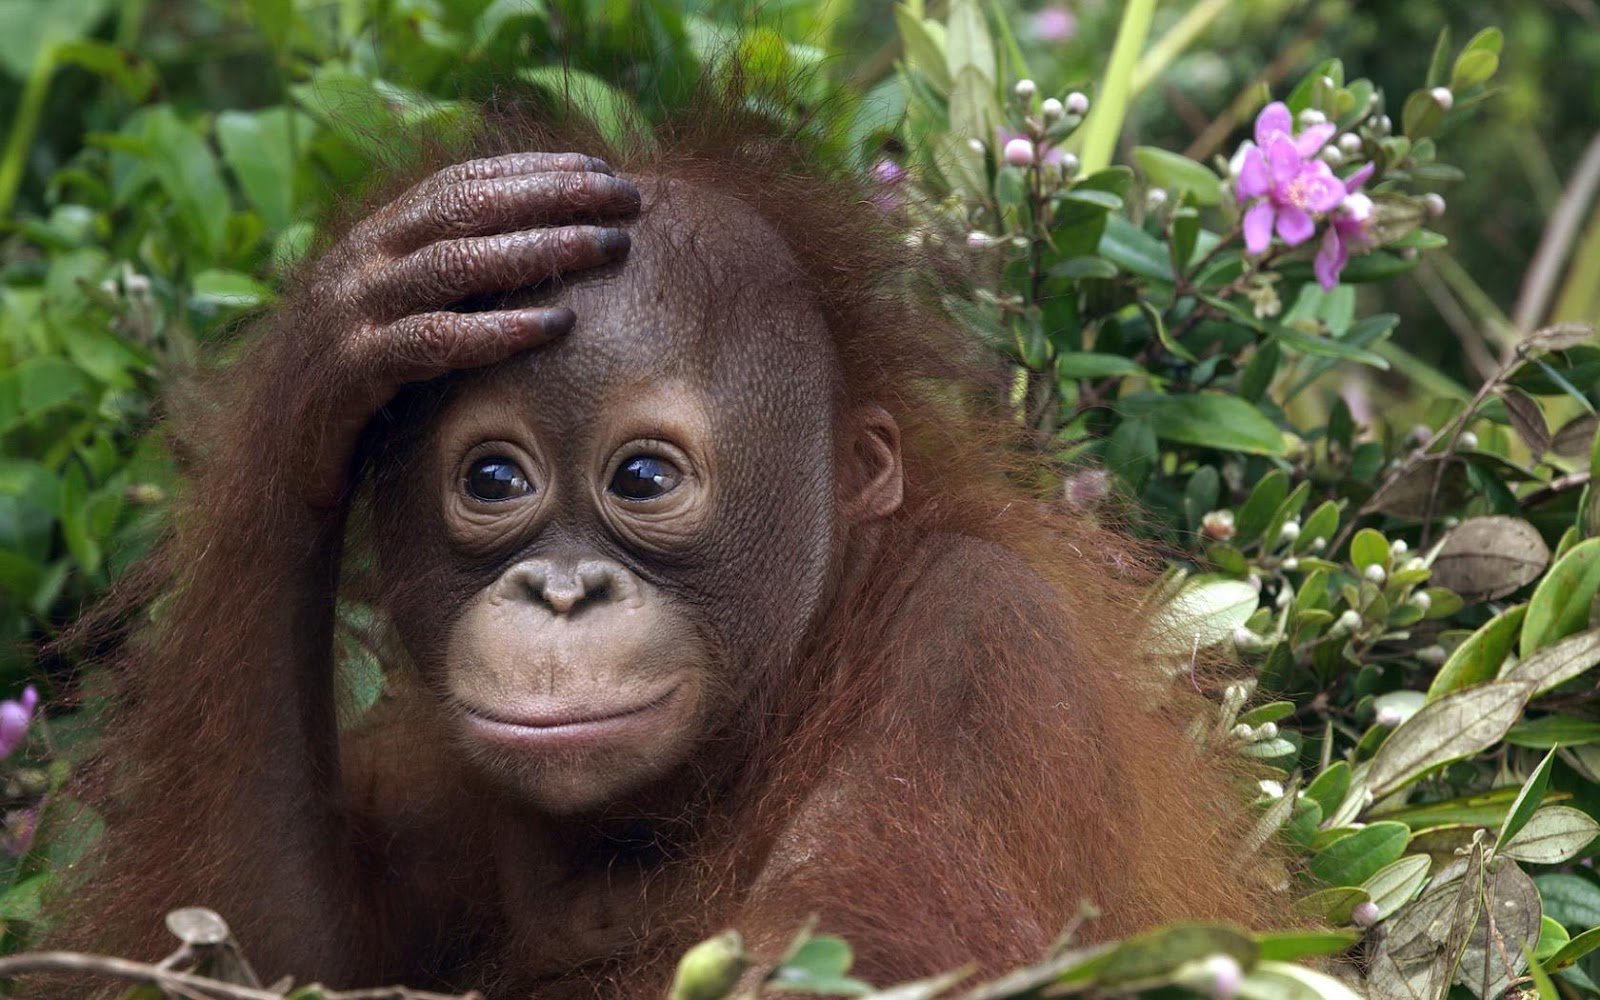 HD animals wallpaper of a cute orangutan baby HD monkeys wallpapers